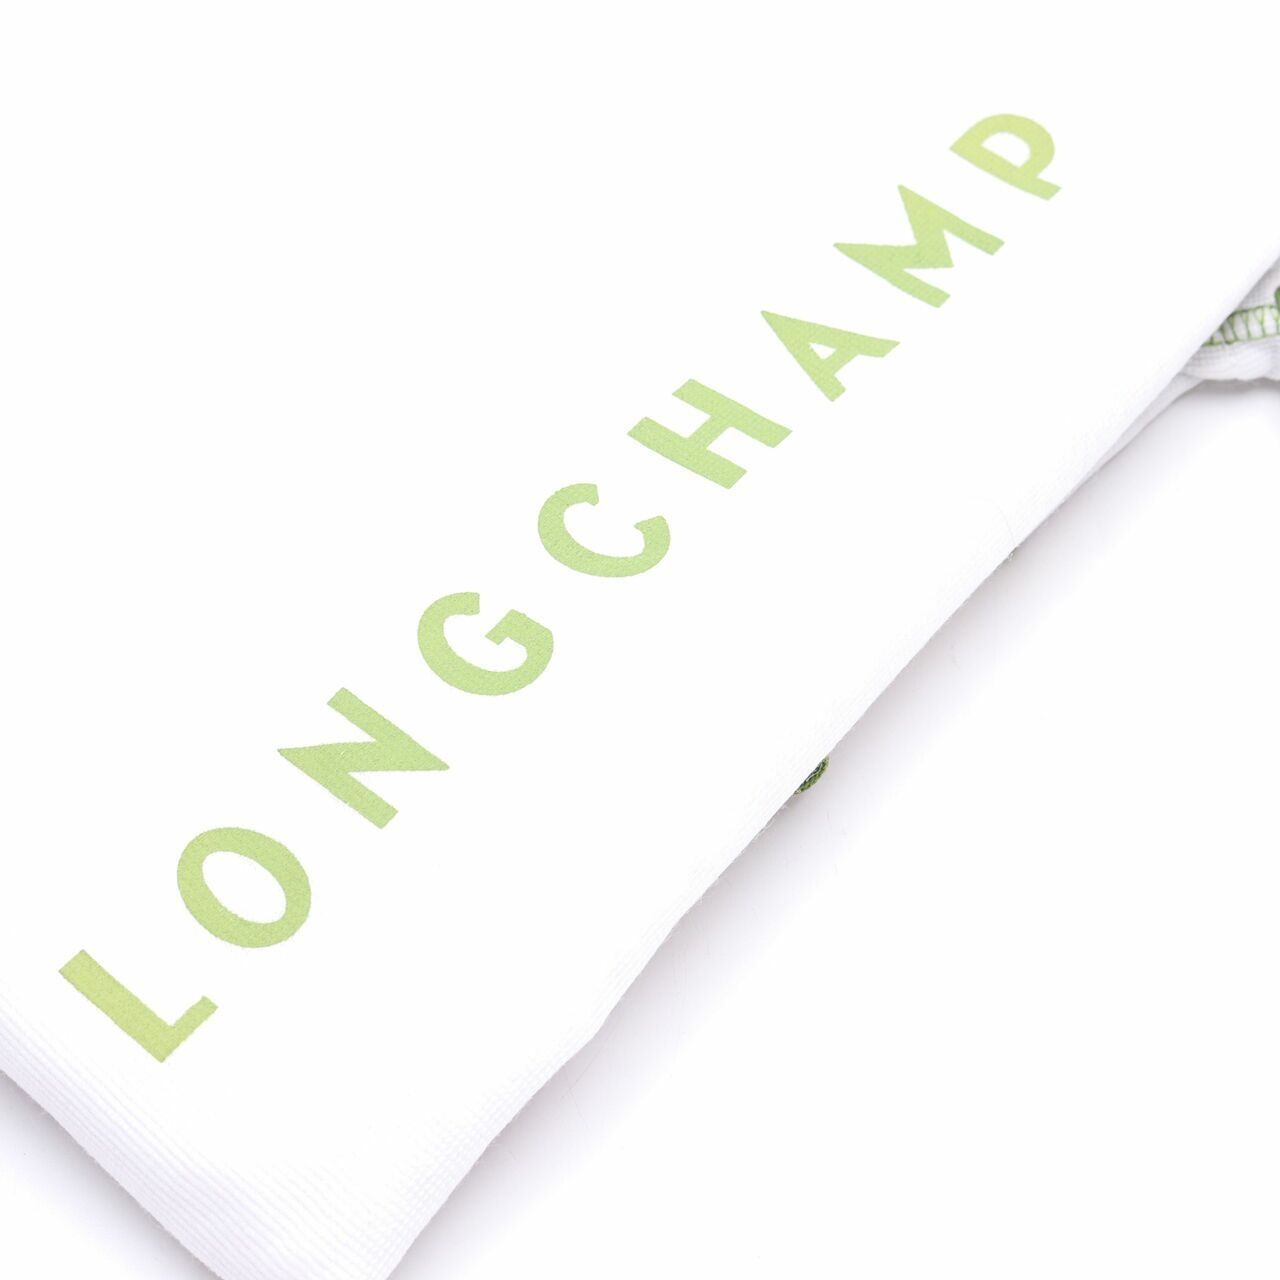 Longchamp Navy/Black Multi-pattern Handbag